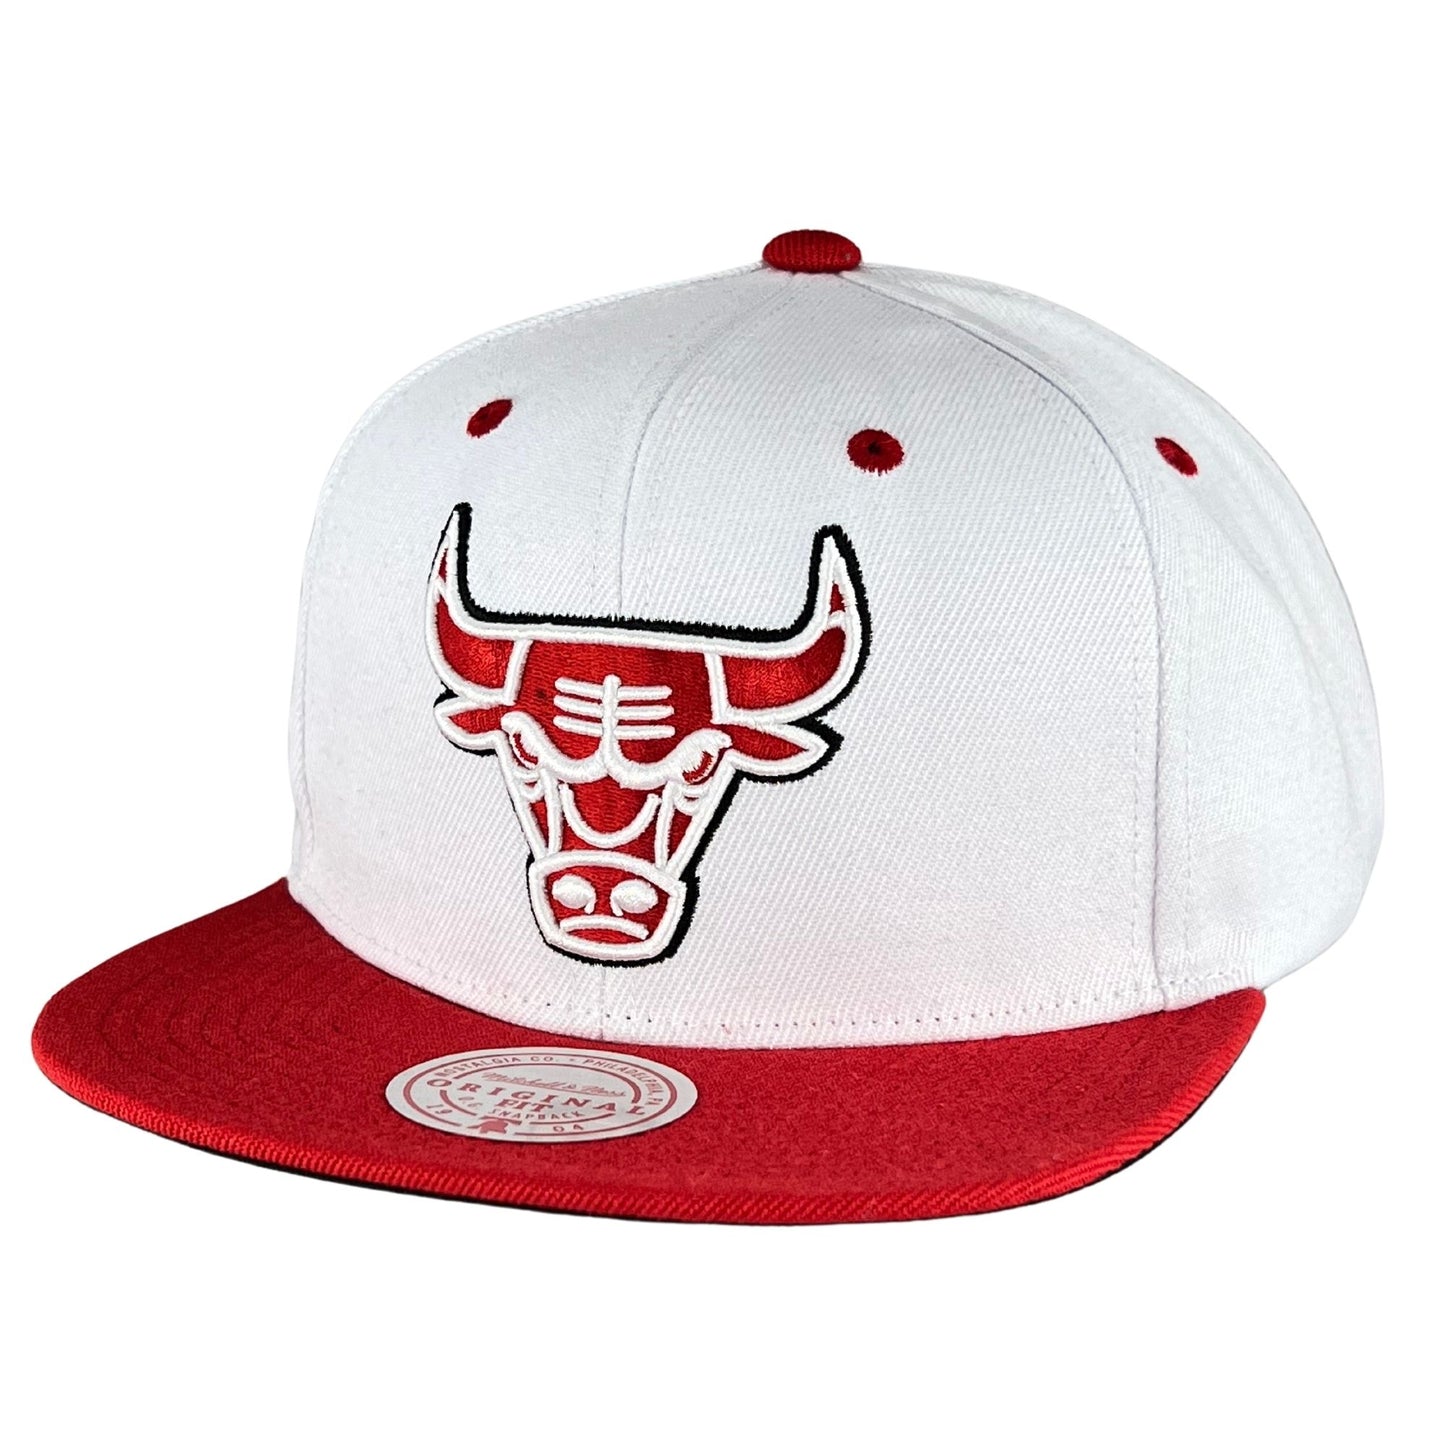 Chicago Bulls White Red Snapback Hat